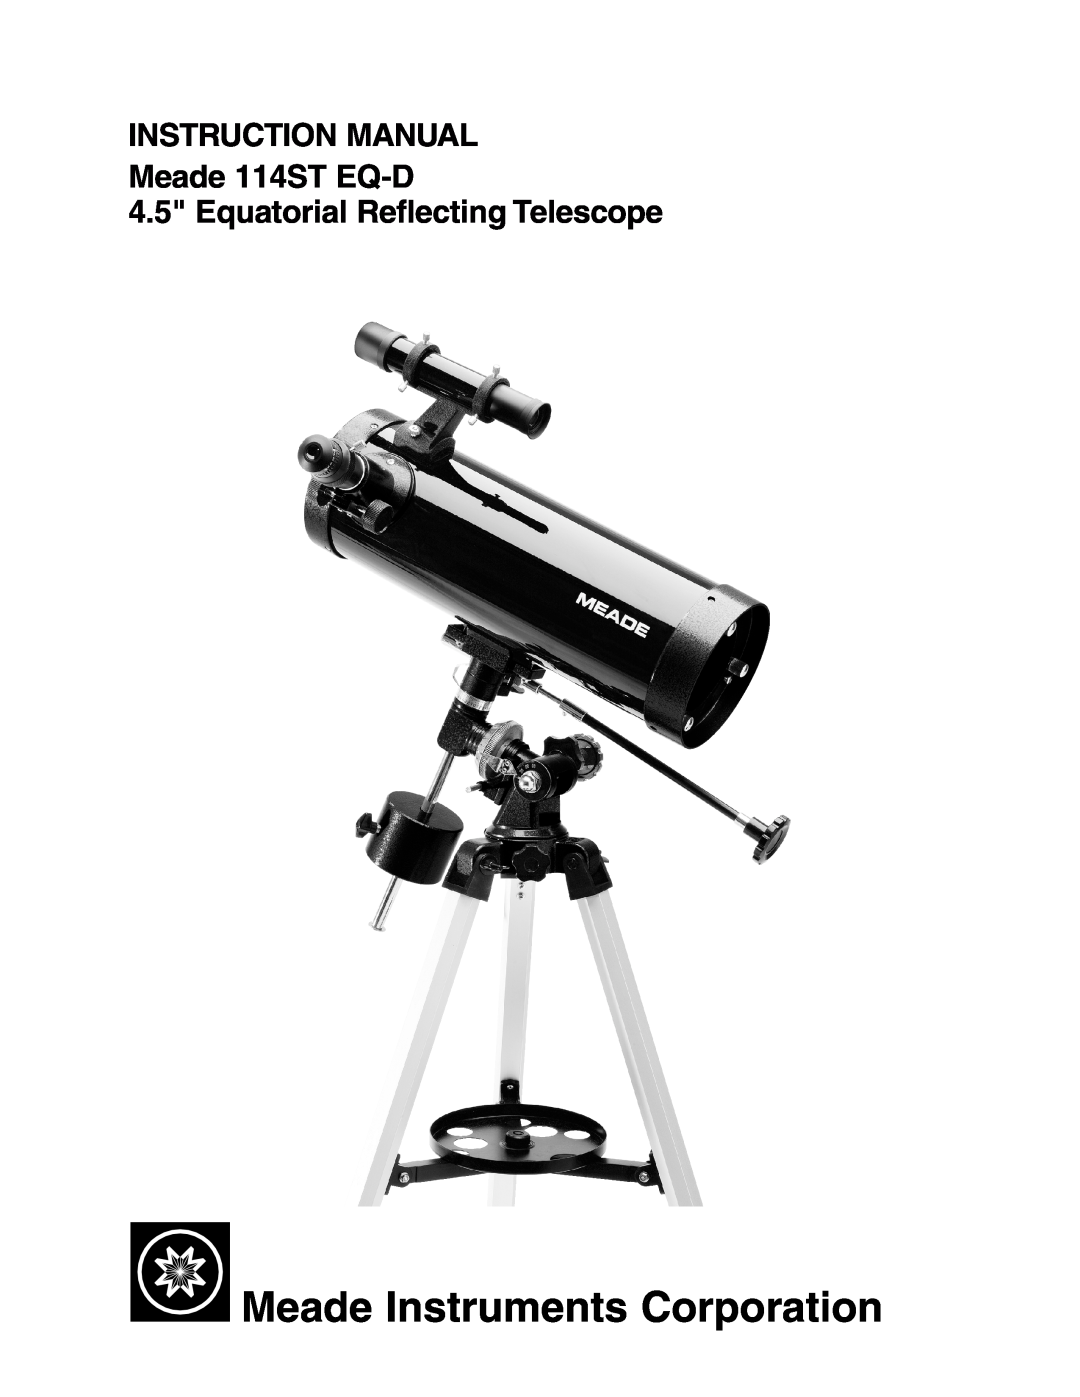 Meade instruction manual INSTRUCTION MANUAL Meade 114ST EQ-D, Equatorial Reflecting Telescope 